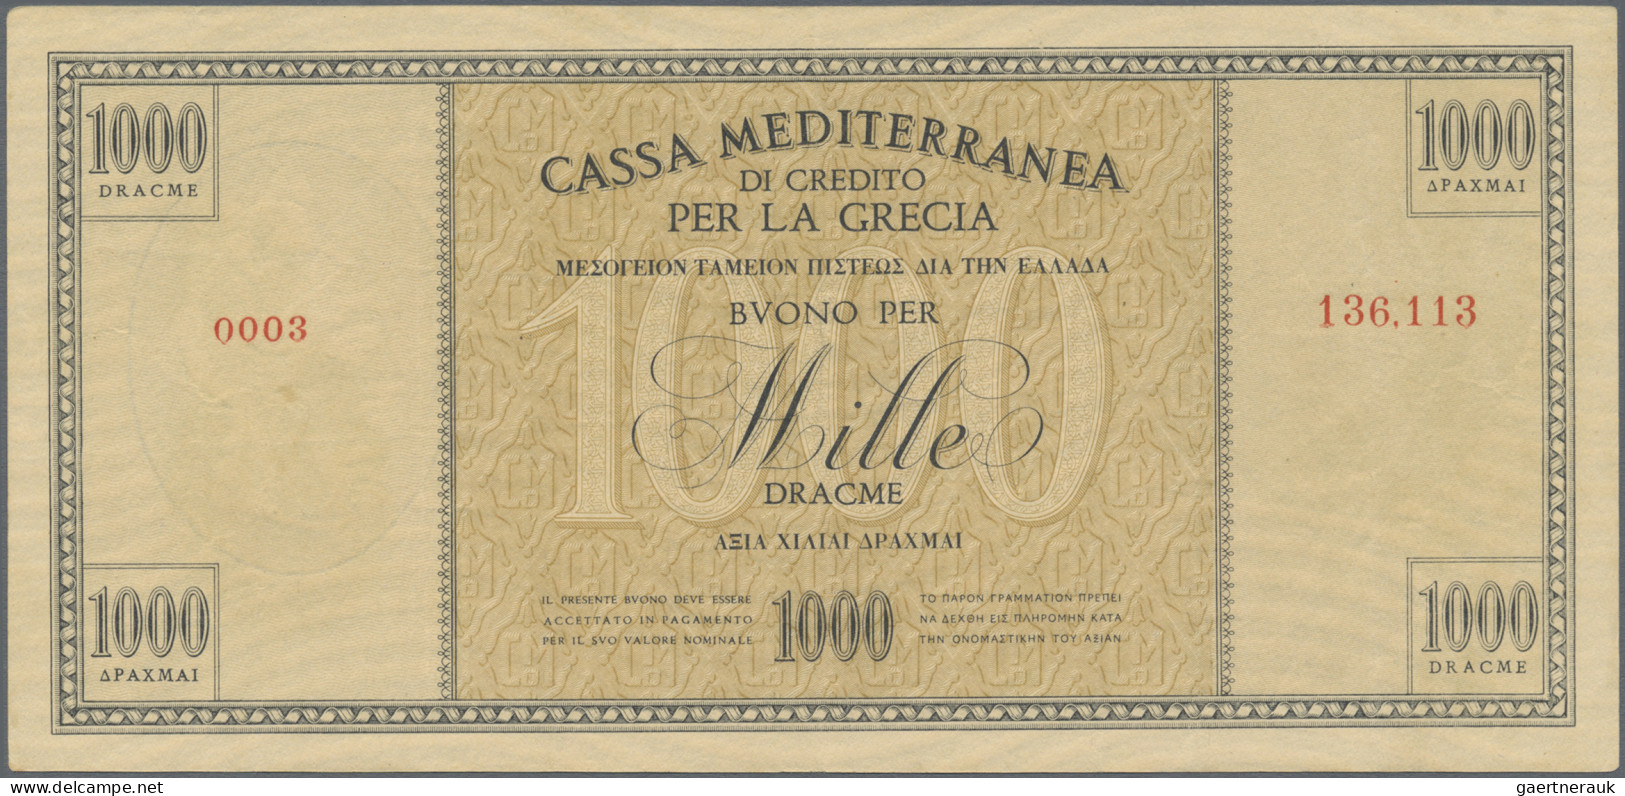 Greece: Cassa Mediterranea per la Grecia, nice set with 4 banknotes ND(1941) ser